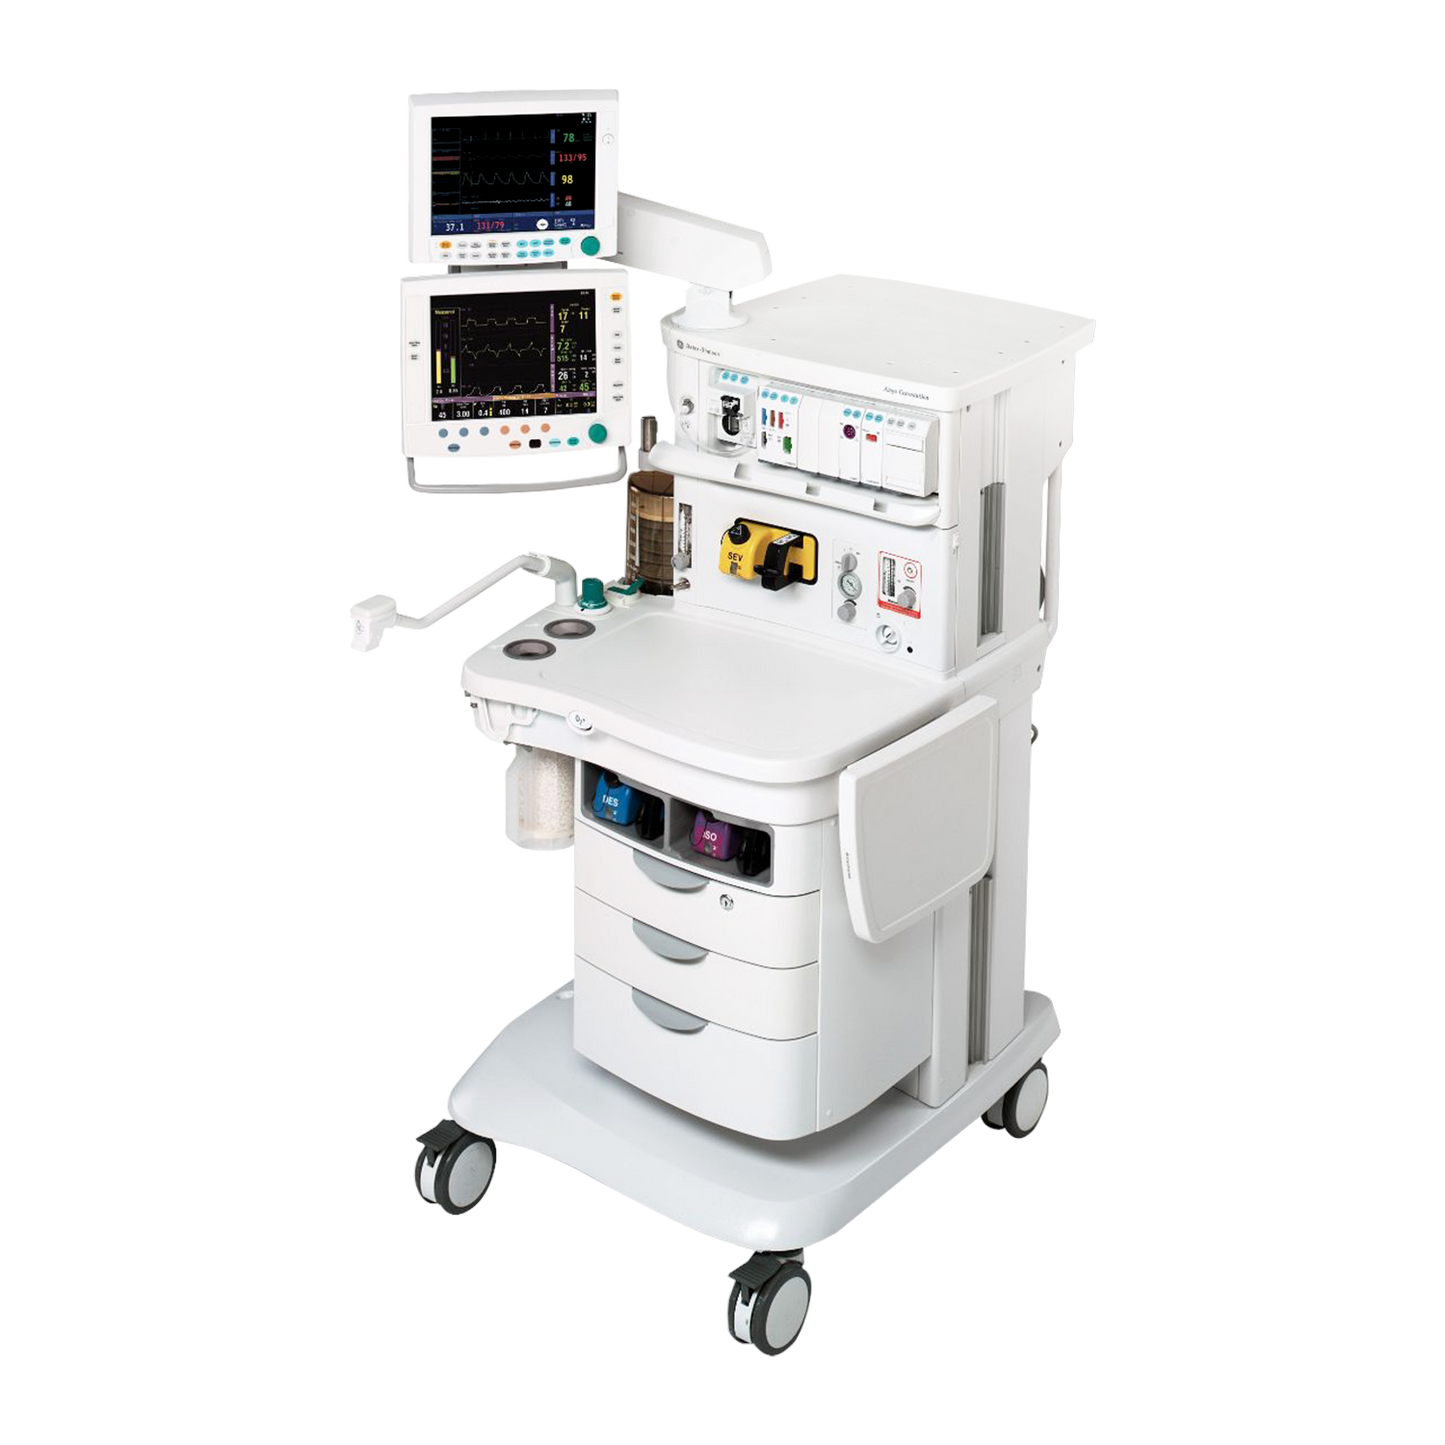 GE Aisys Carestation Anesthesia Machine